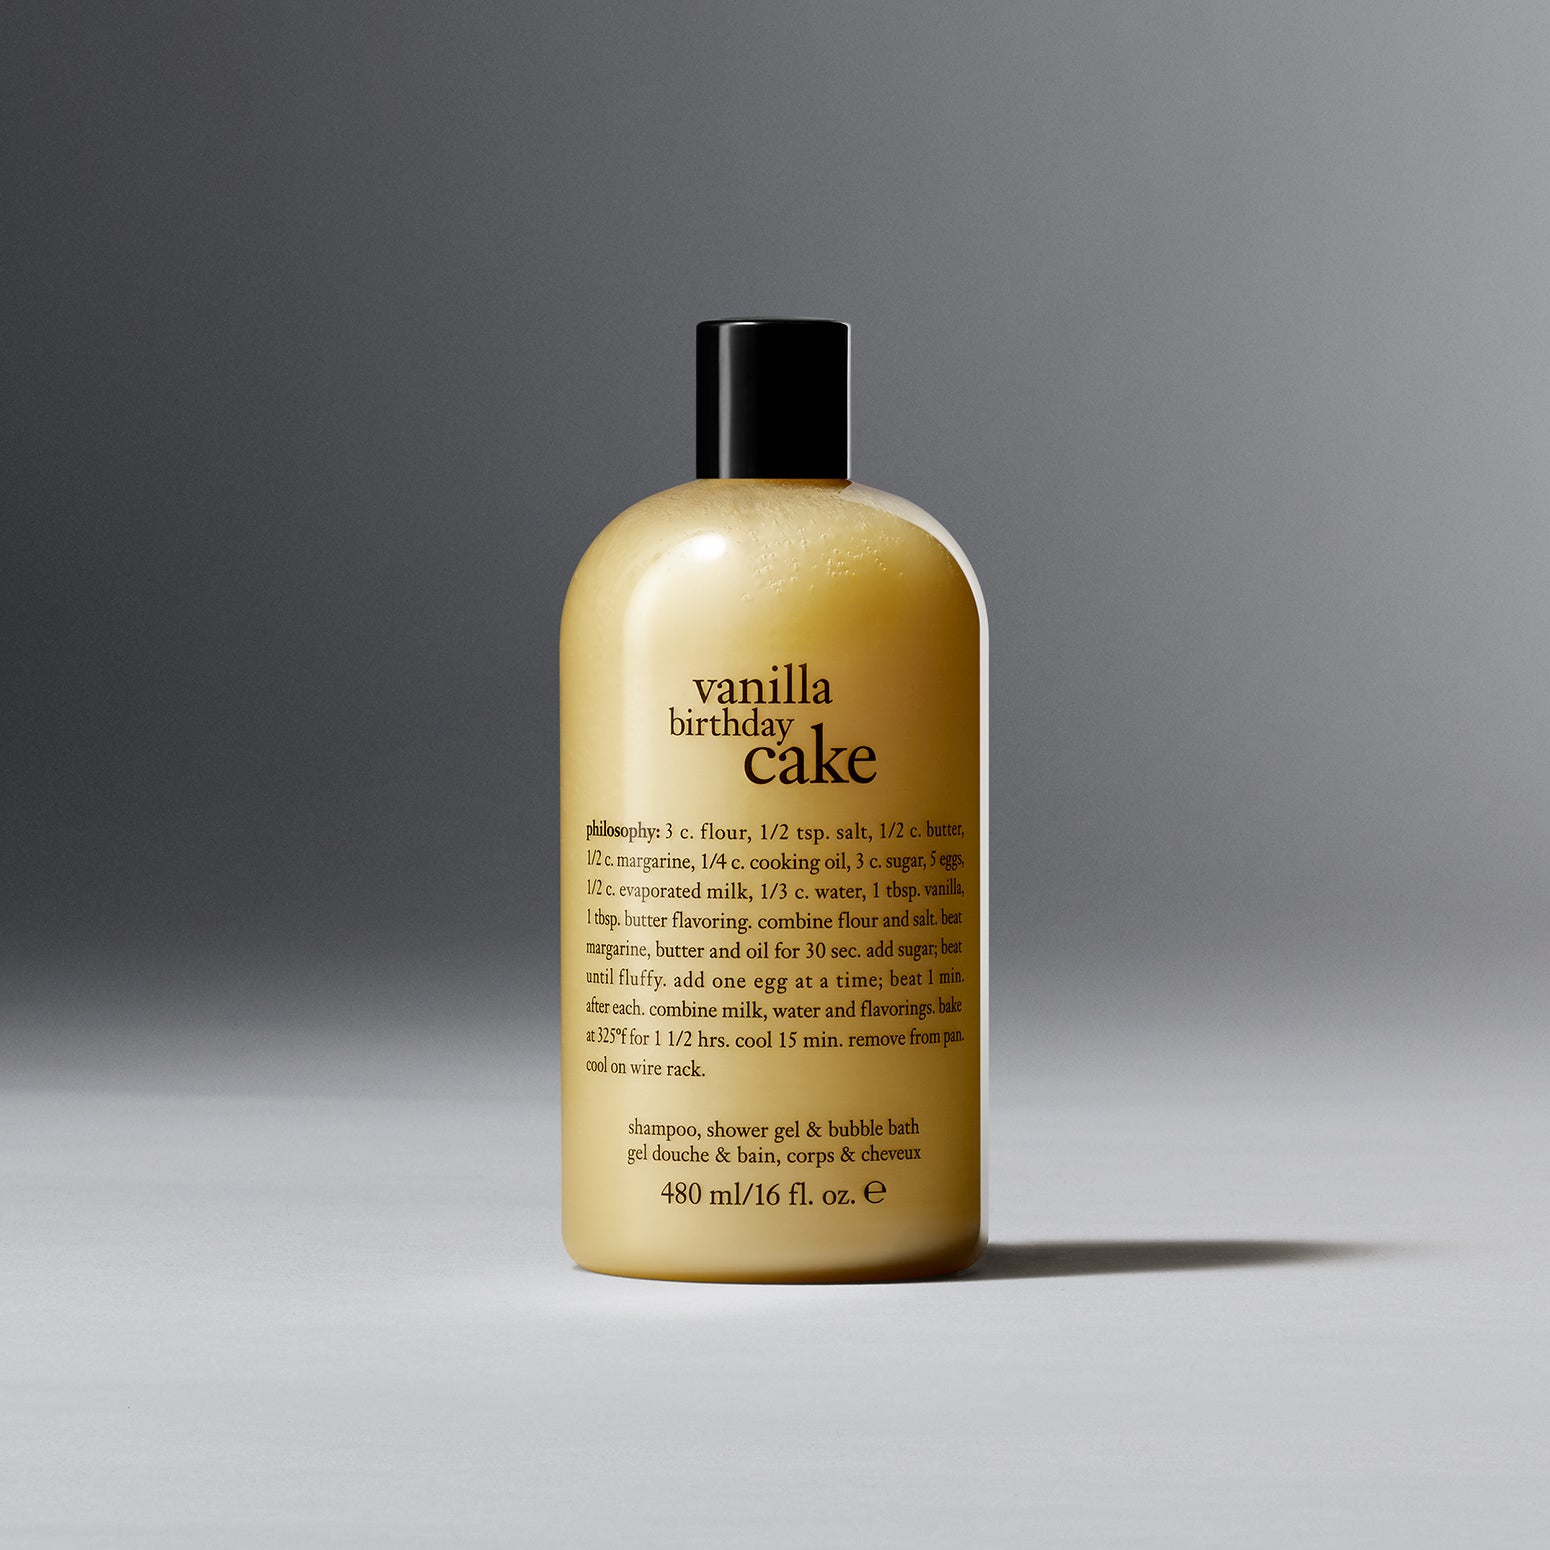 vanilla birthday cake shampoo, shower gel & bubble bath